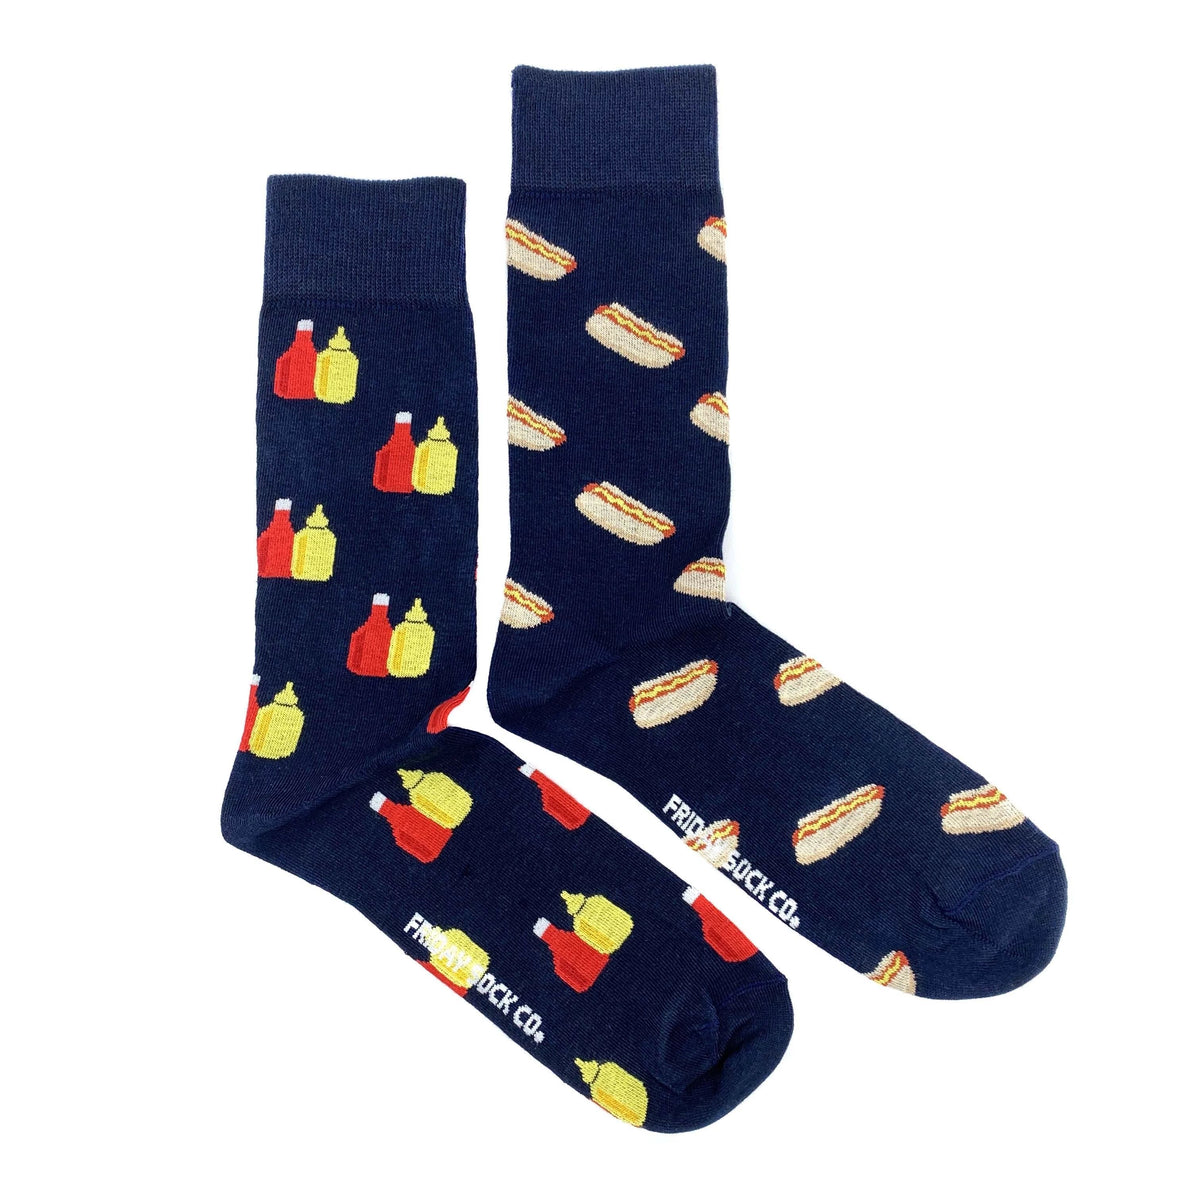 Men's Hotdog & Condiment Socks | Mismatched by Design | Friday Sock Co.